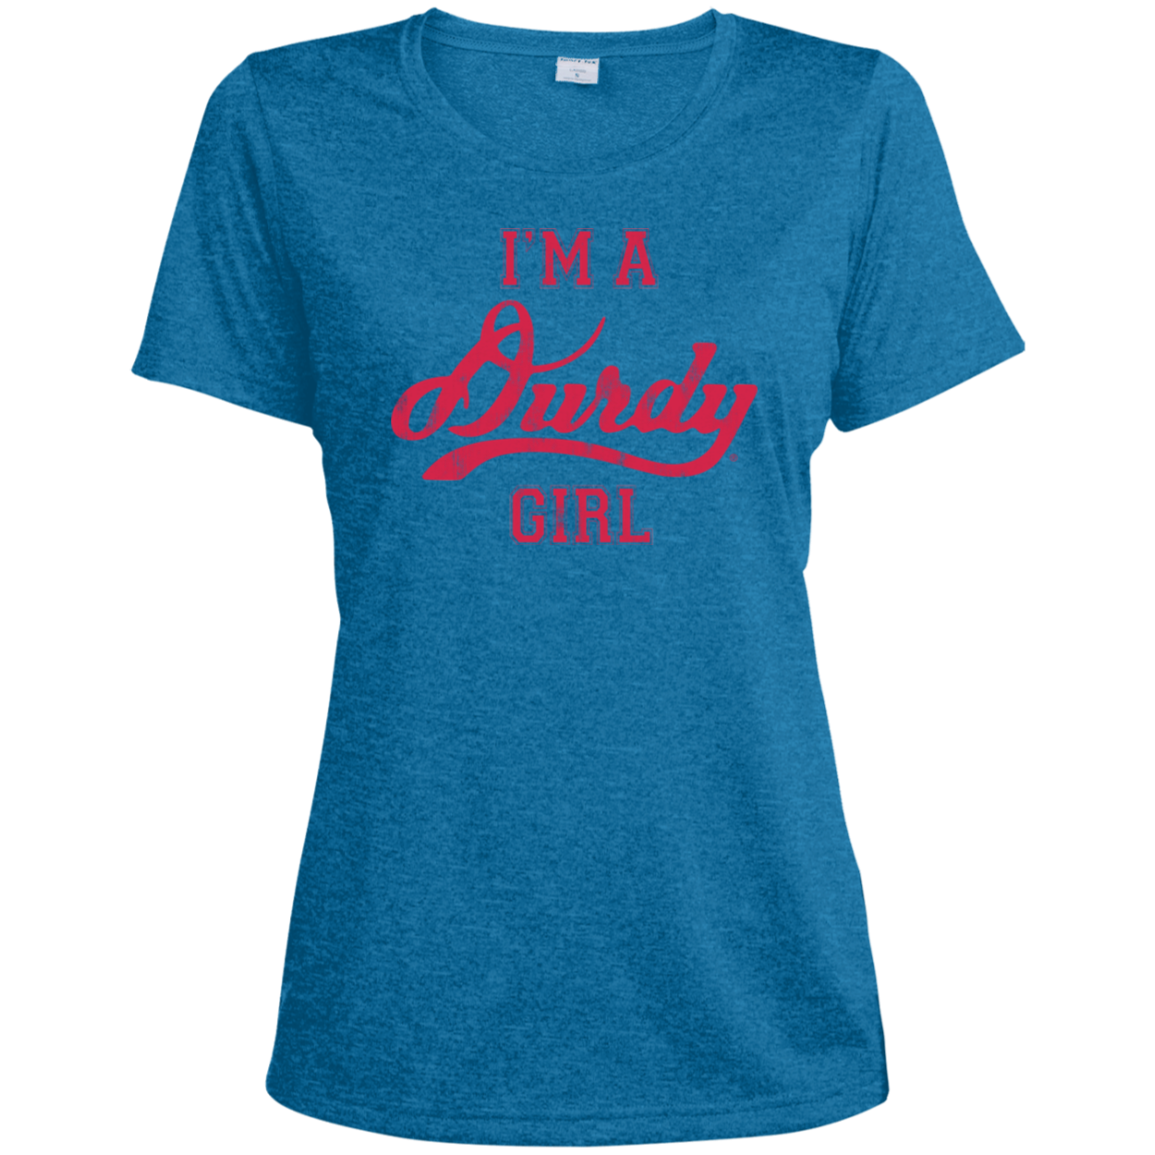 Durdy Girl Sport-Tek Ladies' Heather Dri-Fit Moisture-Wicking T-Shirt